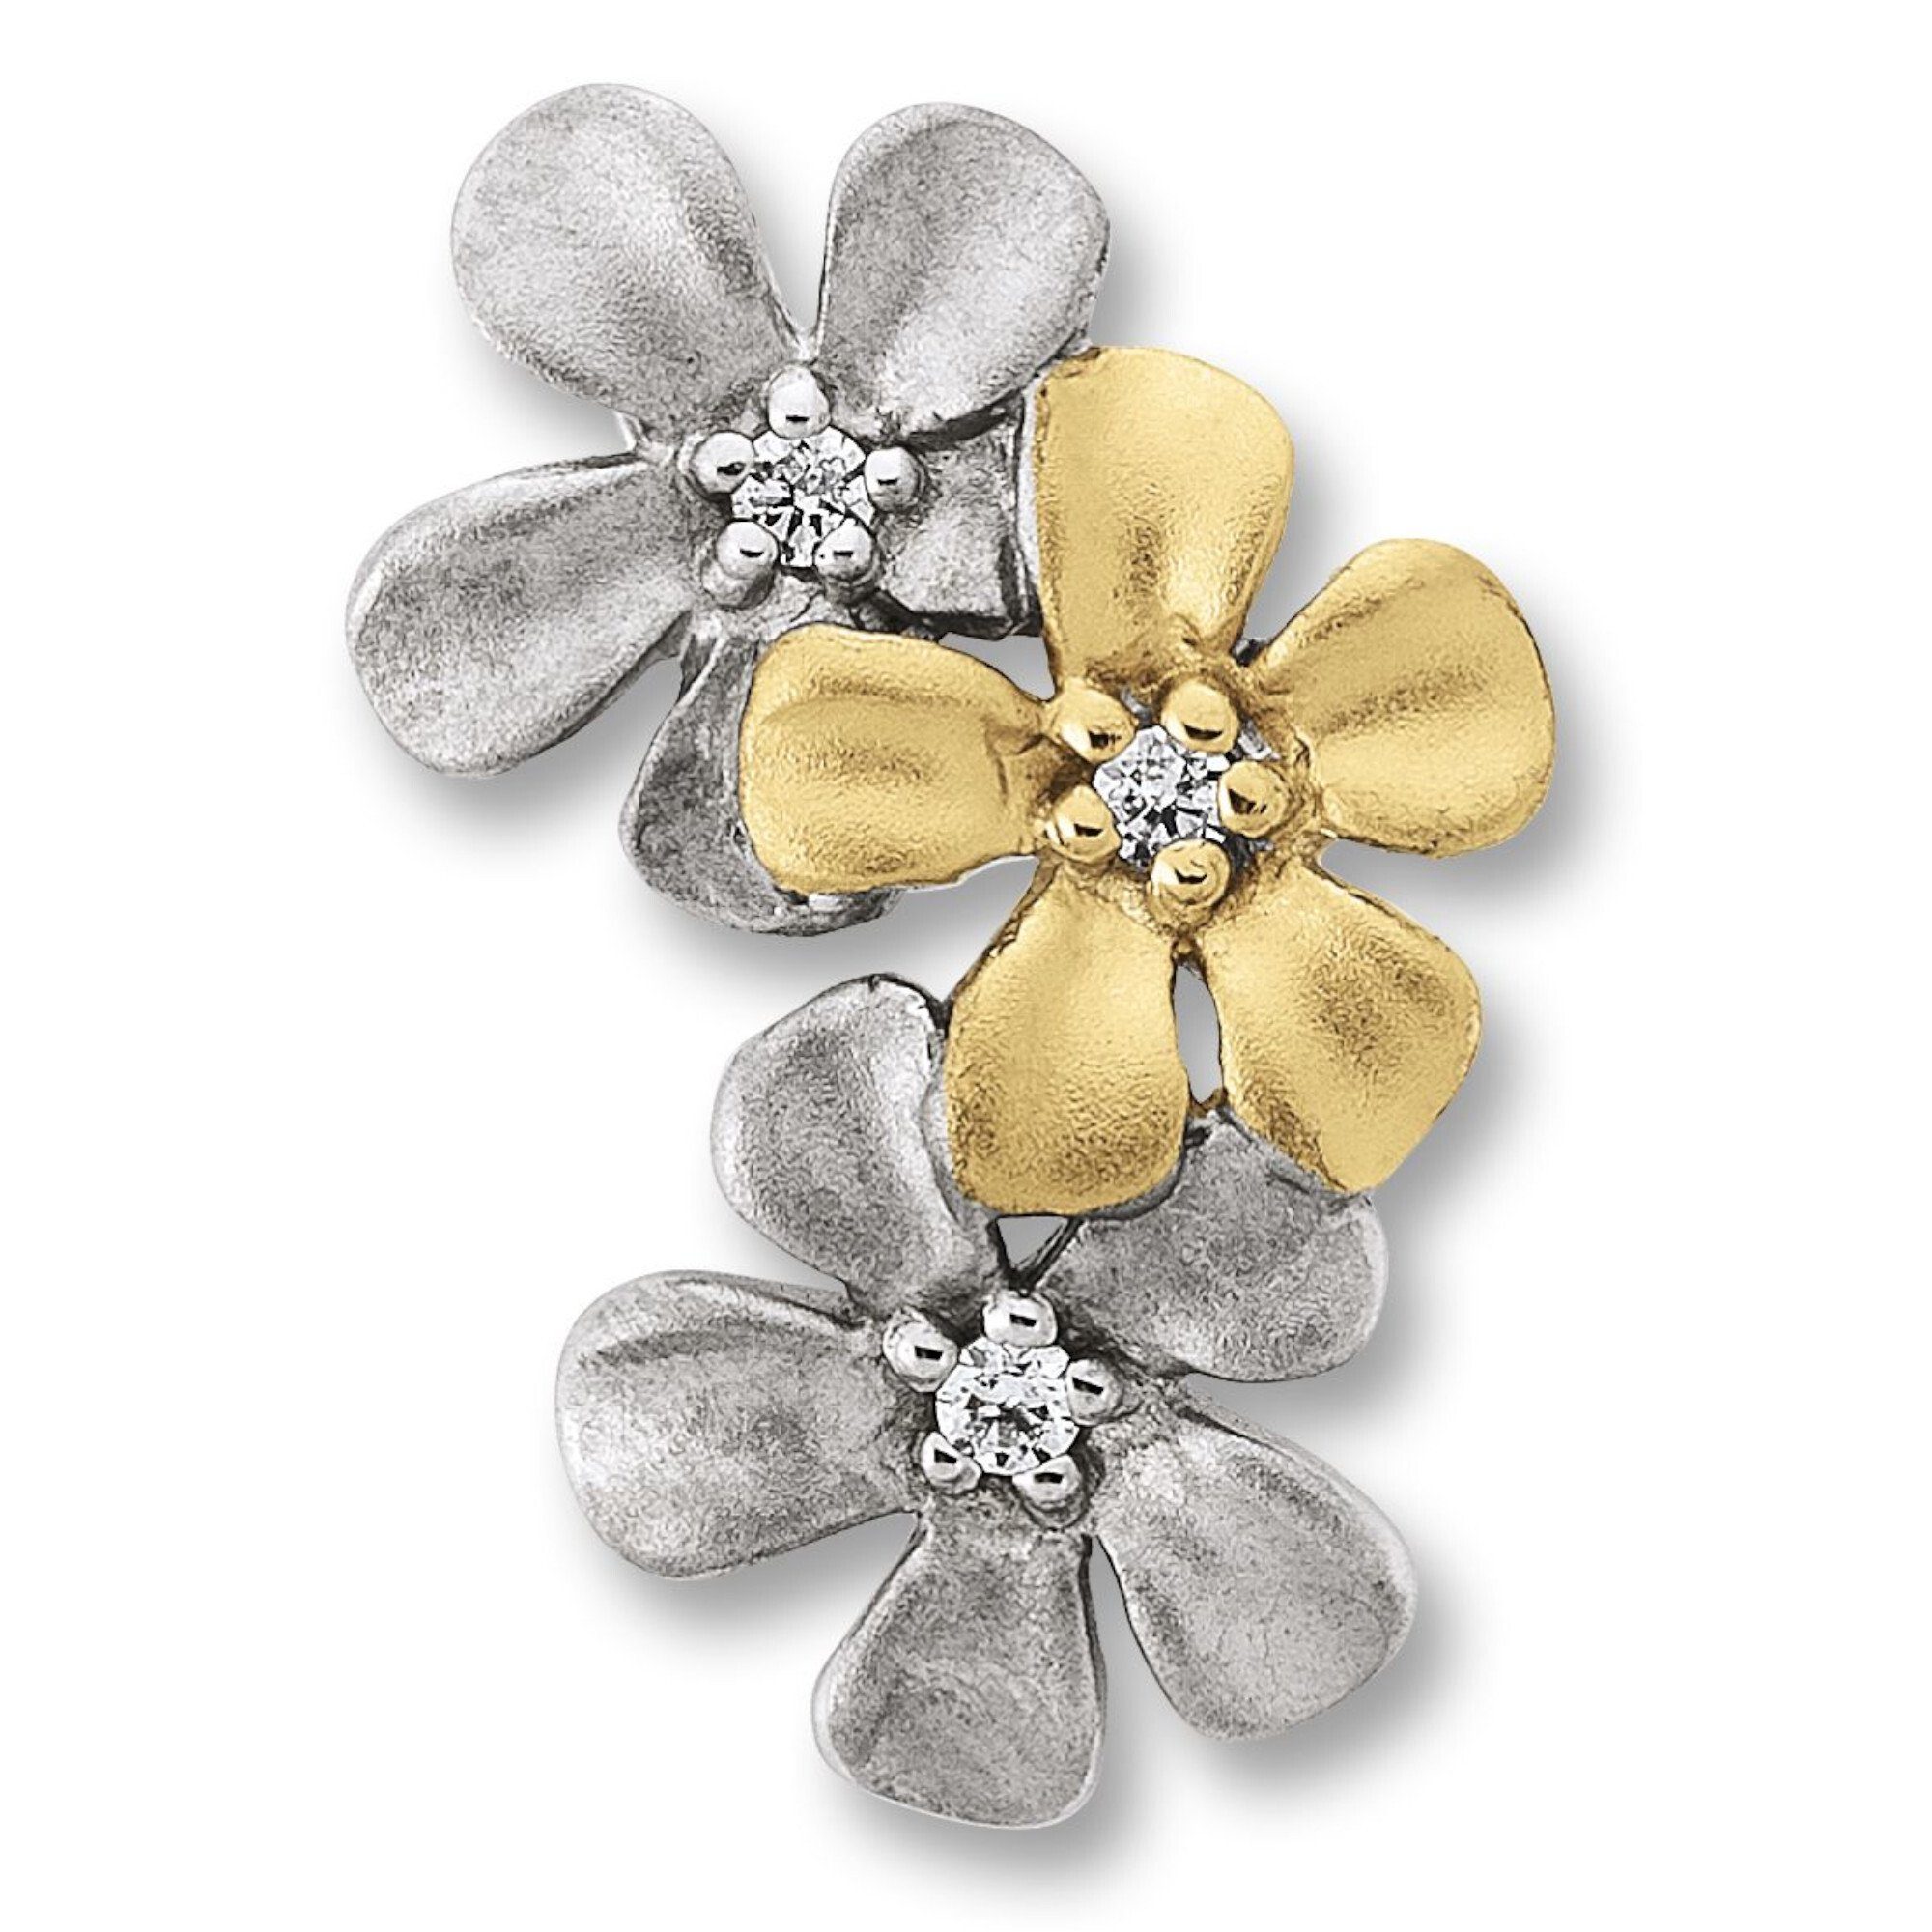 ONE ELEMENT Kettenanhänger Zirkonia Blume Anhänger aus 925 Silber, Damen Silber Schmuck Blume